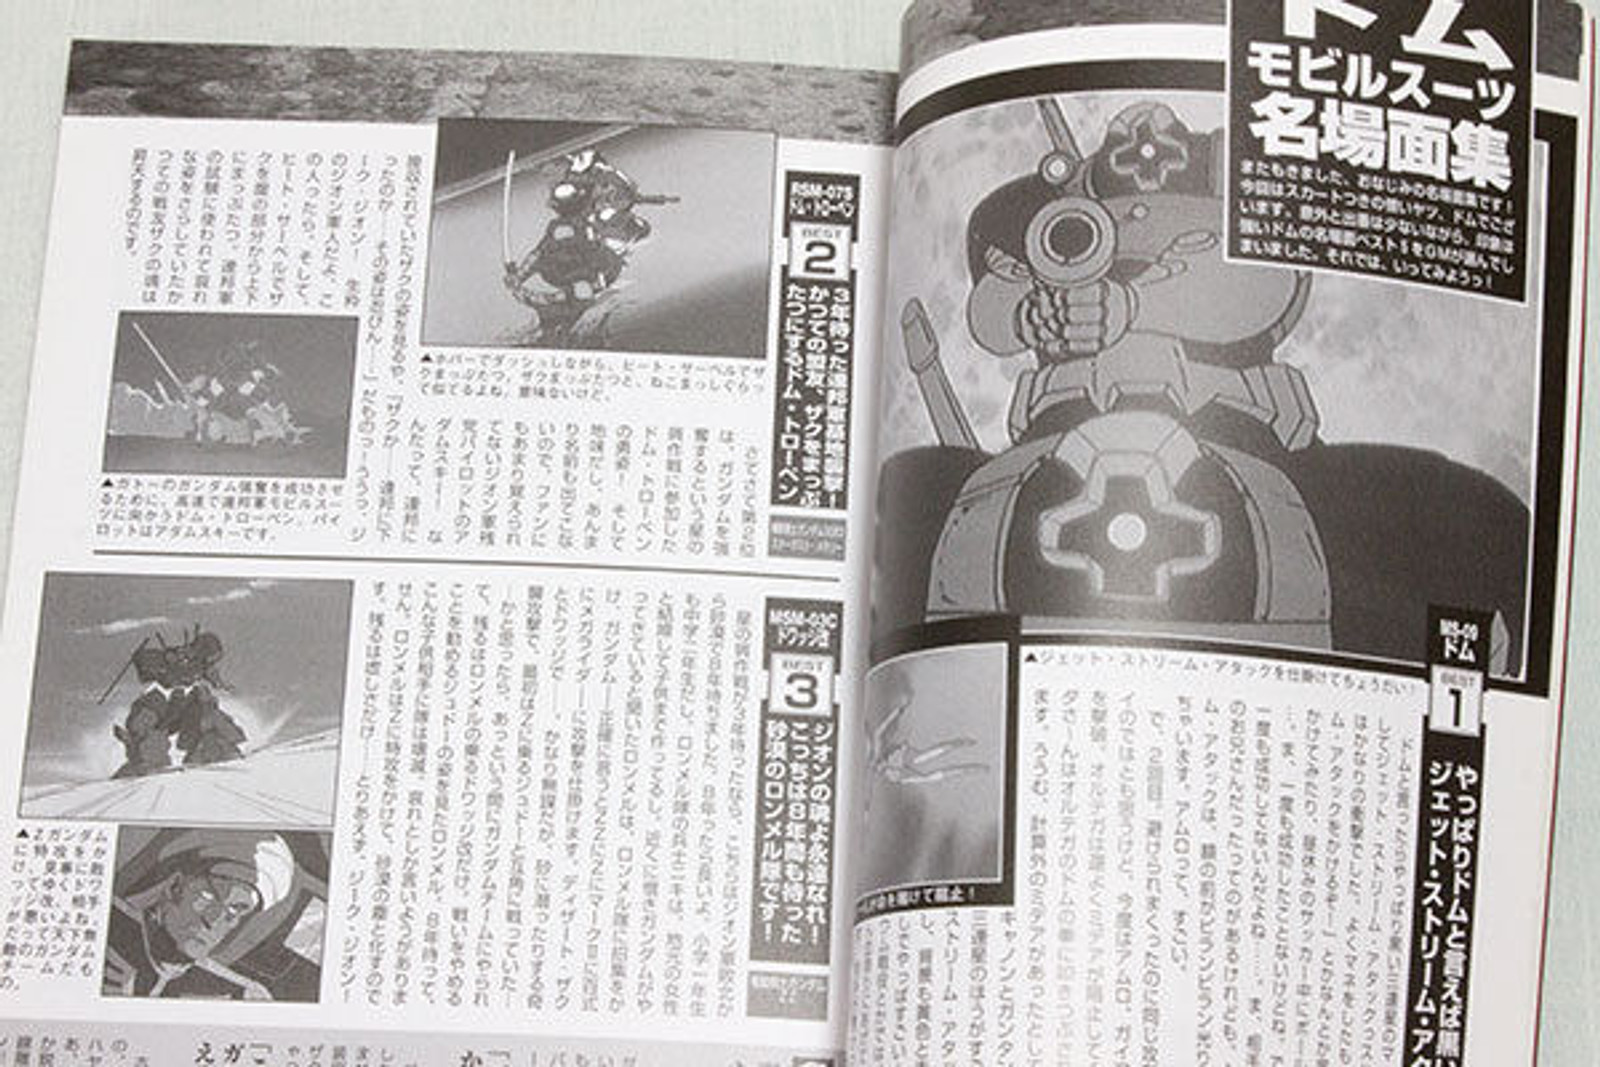 Great Mechanics Vol.4 Gundam Guide Book JAPAN ANIME MANGA ROBOT